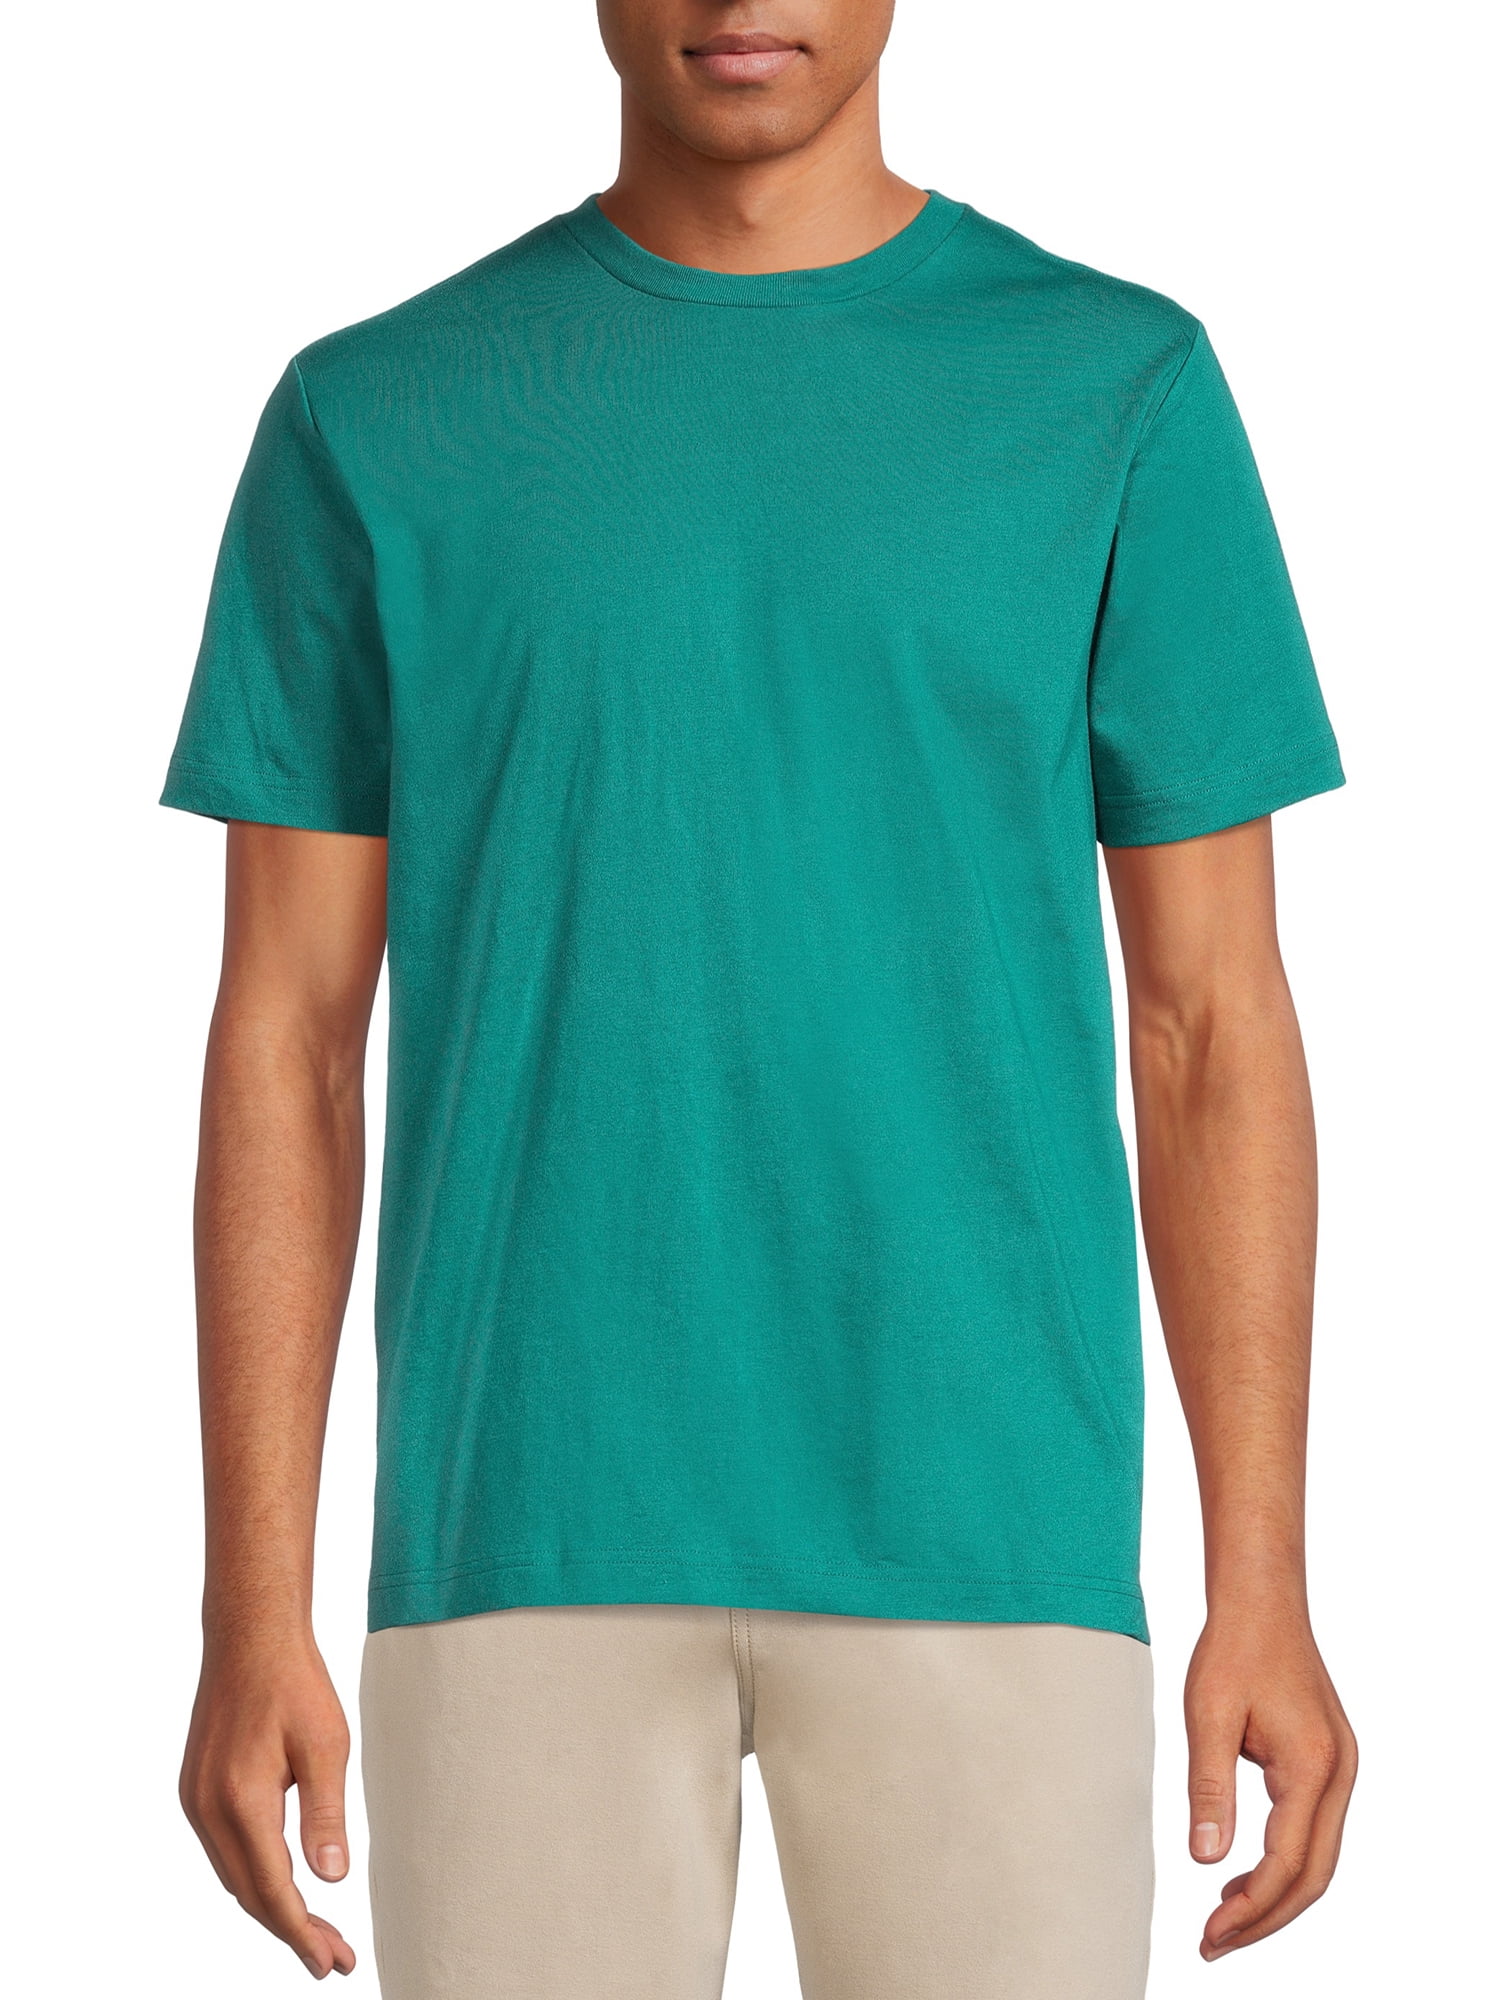 George Men’s Crewneck T-Shirt with Short Sleeves - Walmart.com